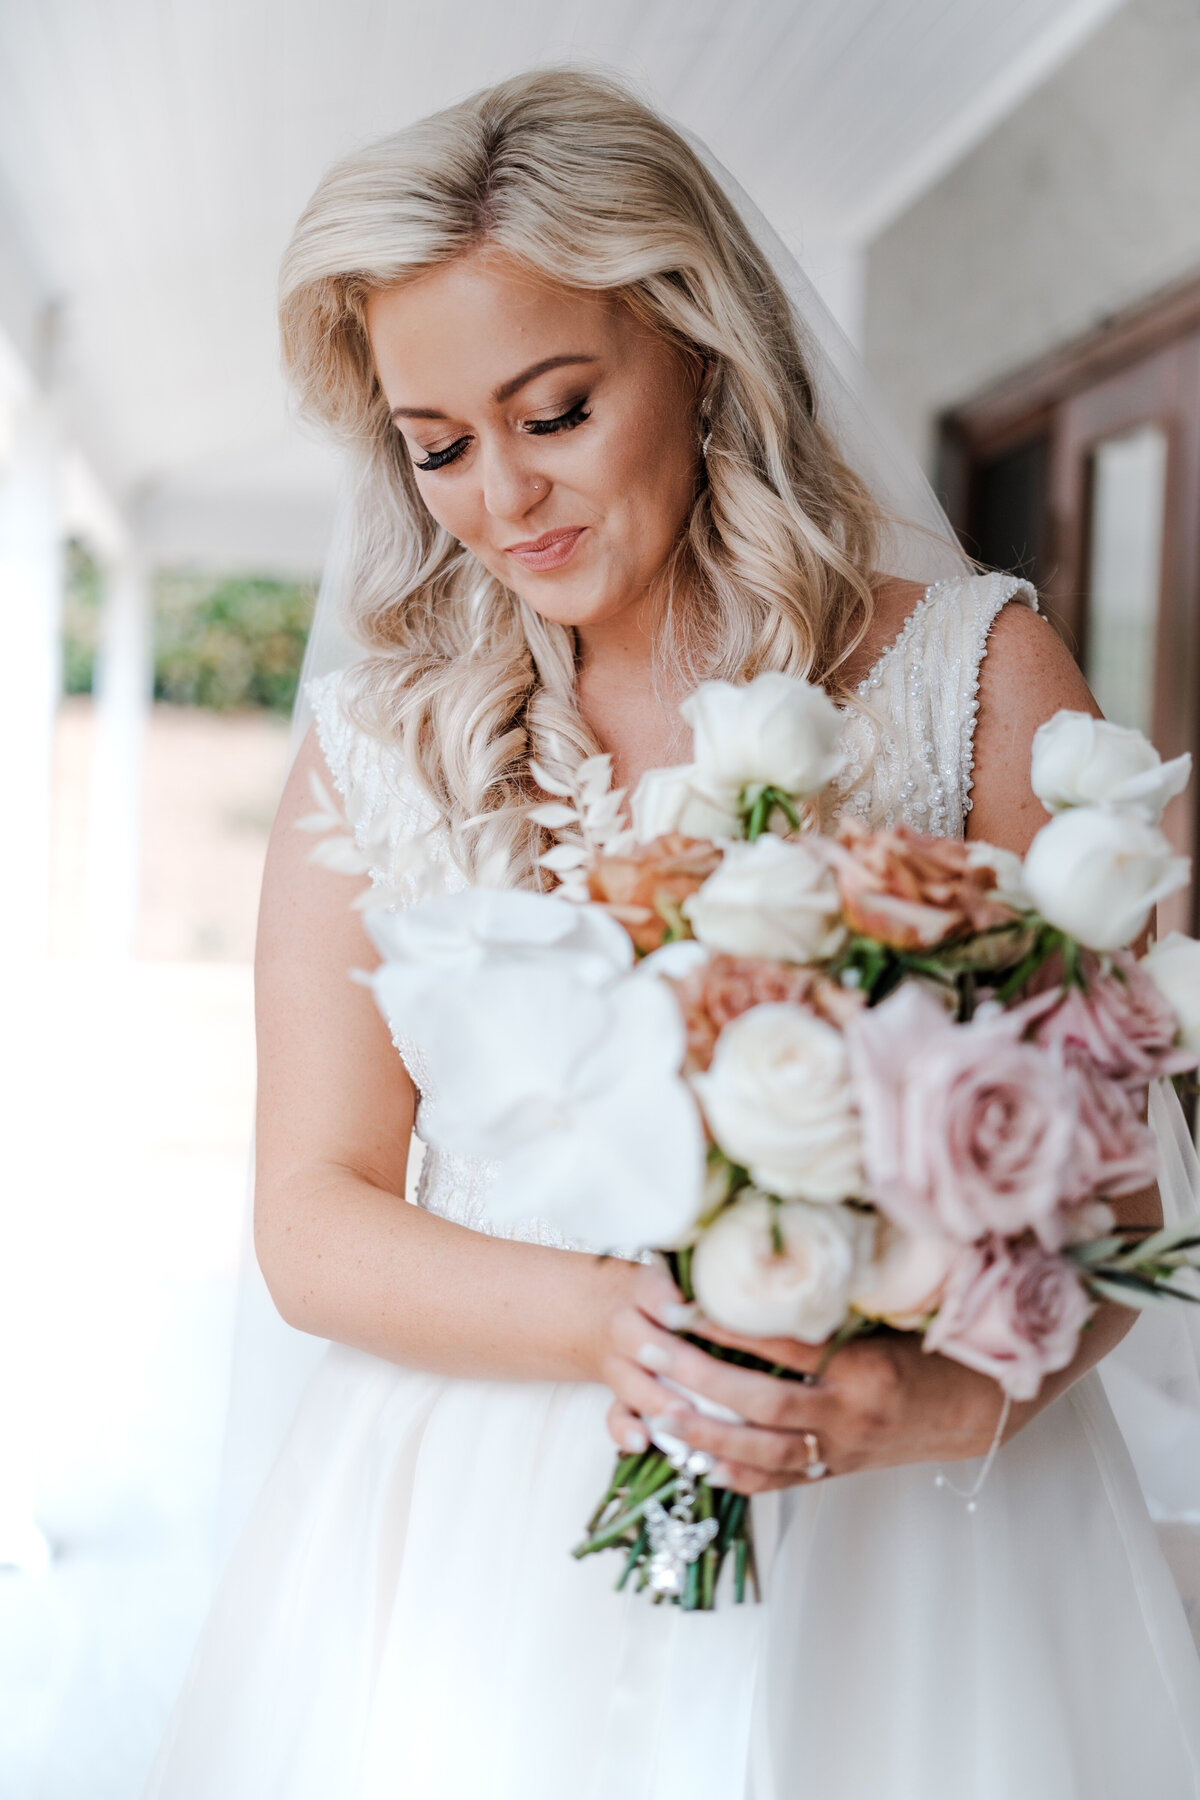 Abigail_Steven_Wedding_Images_Roam Ahead Weddings - 184